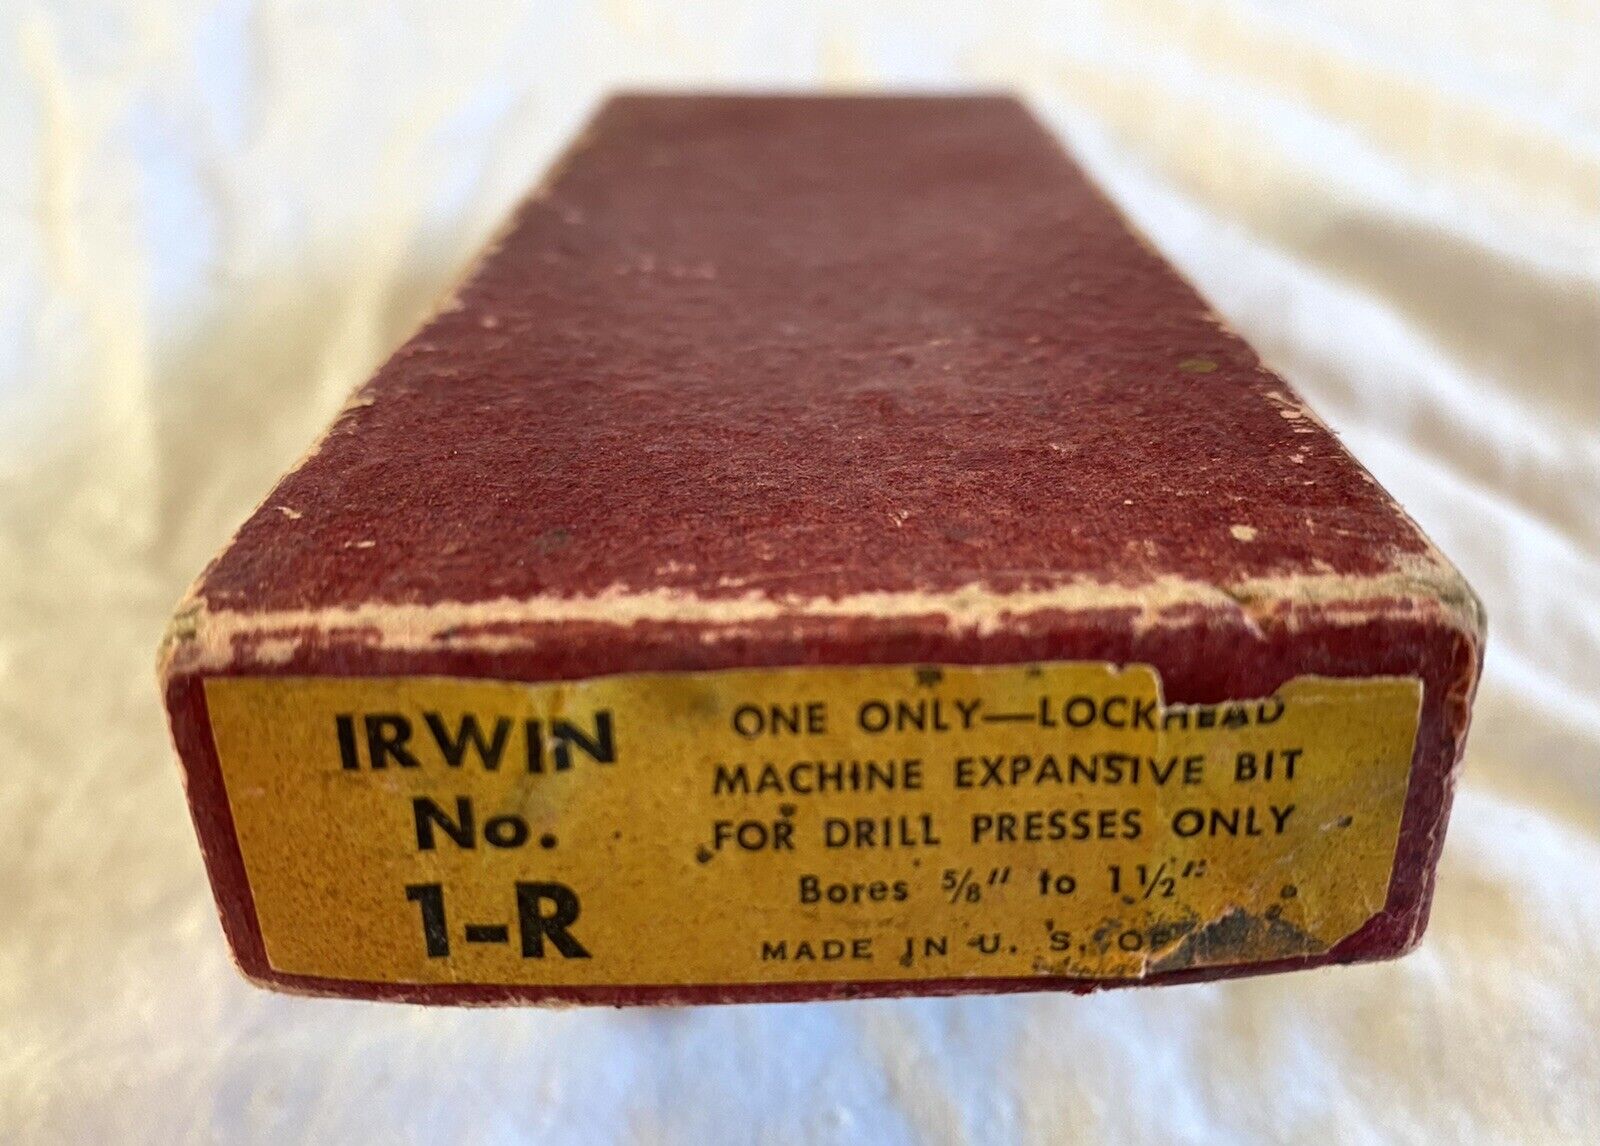 Irwin No. 1-R Lockhead Machine Expansive Wood Bit 5/8'' To 1-1/2'' with Box 